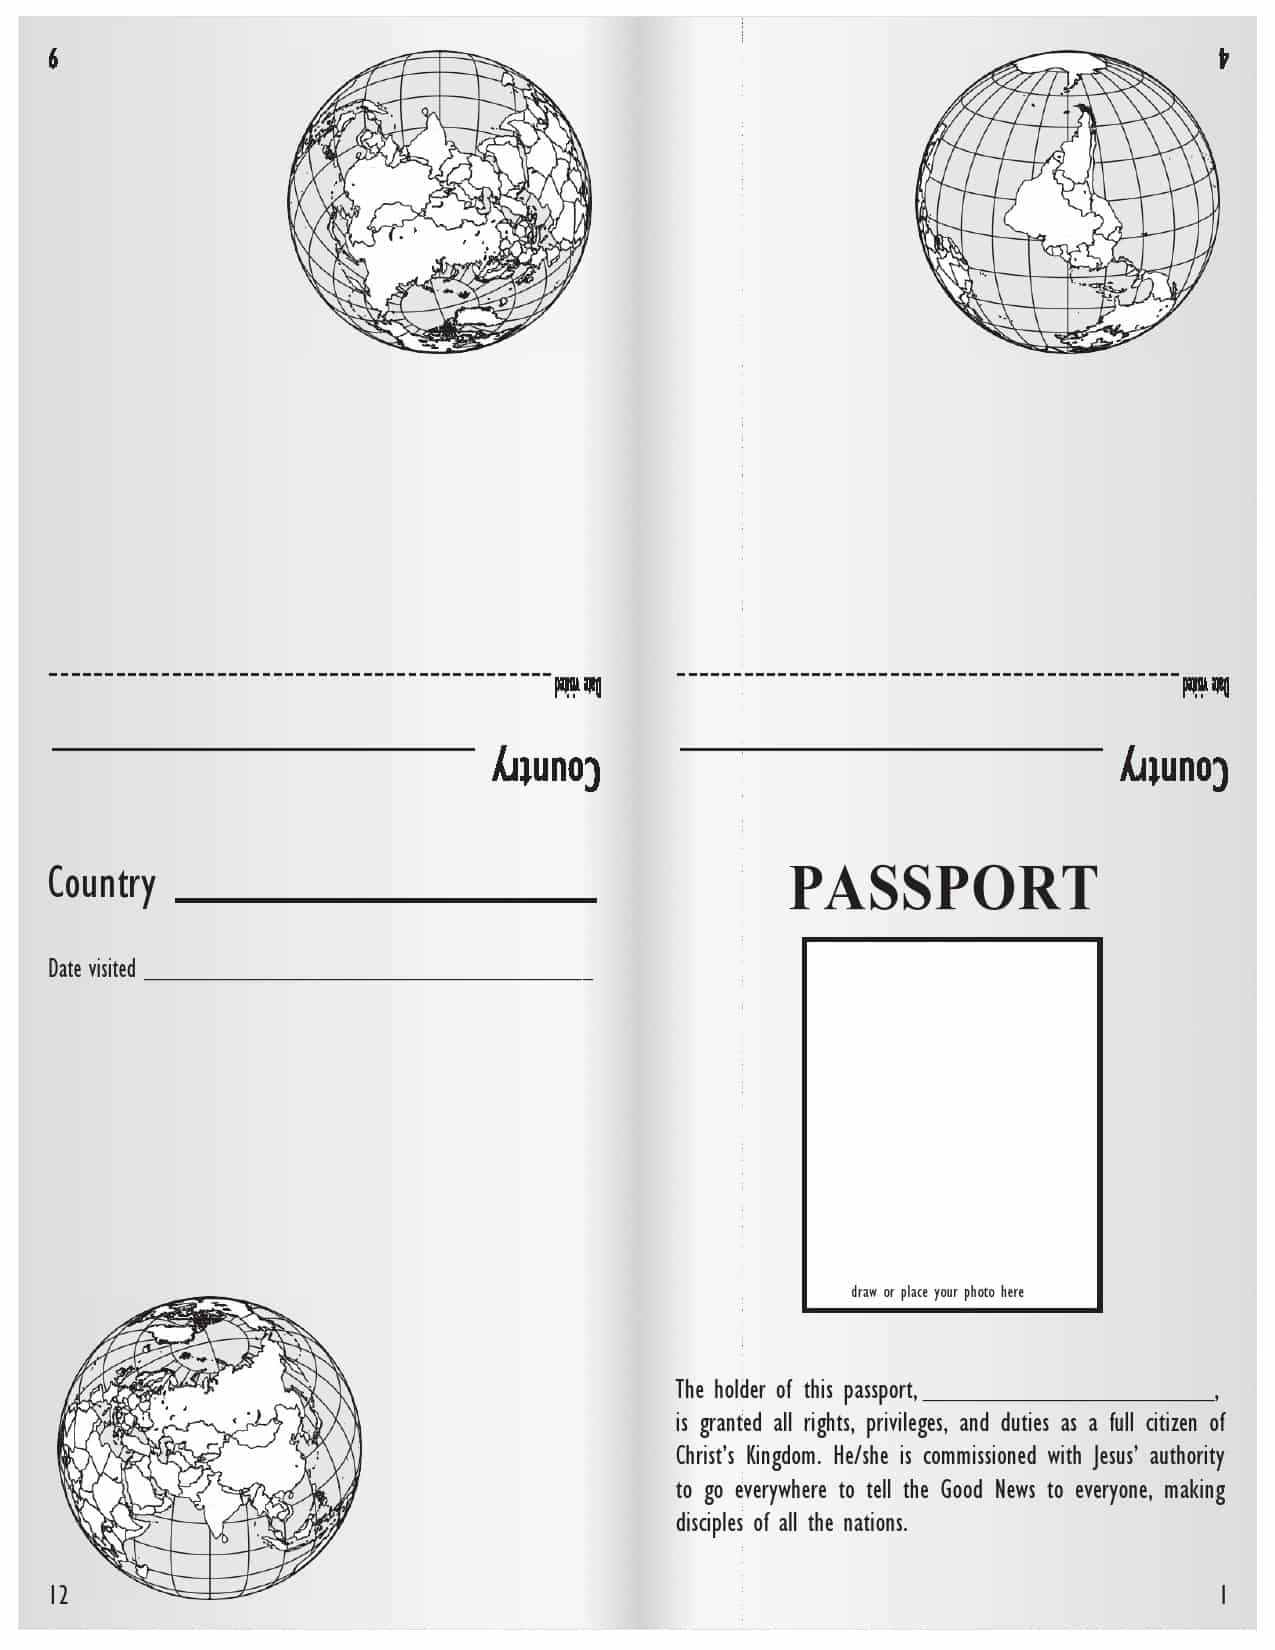 Free Passport Template To Print - FREE PRINTABLE TEMPLATES